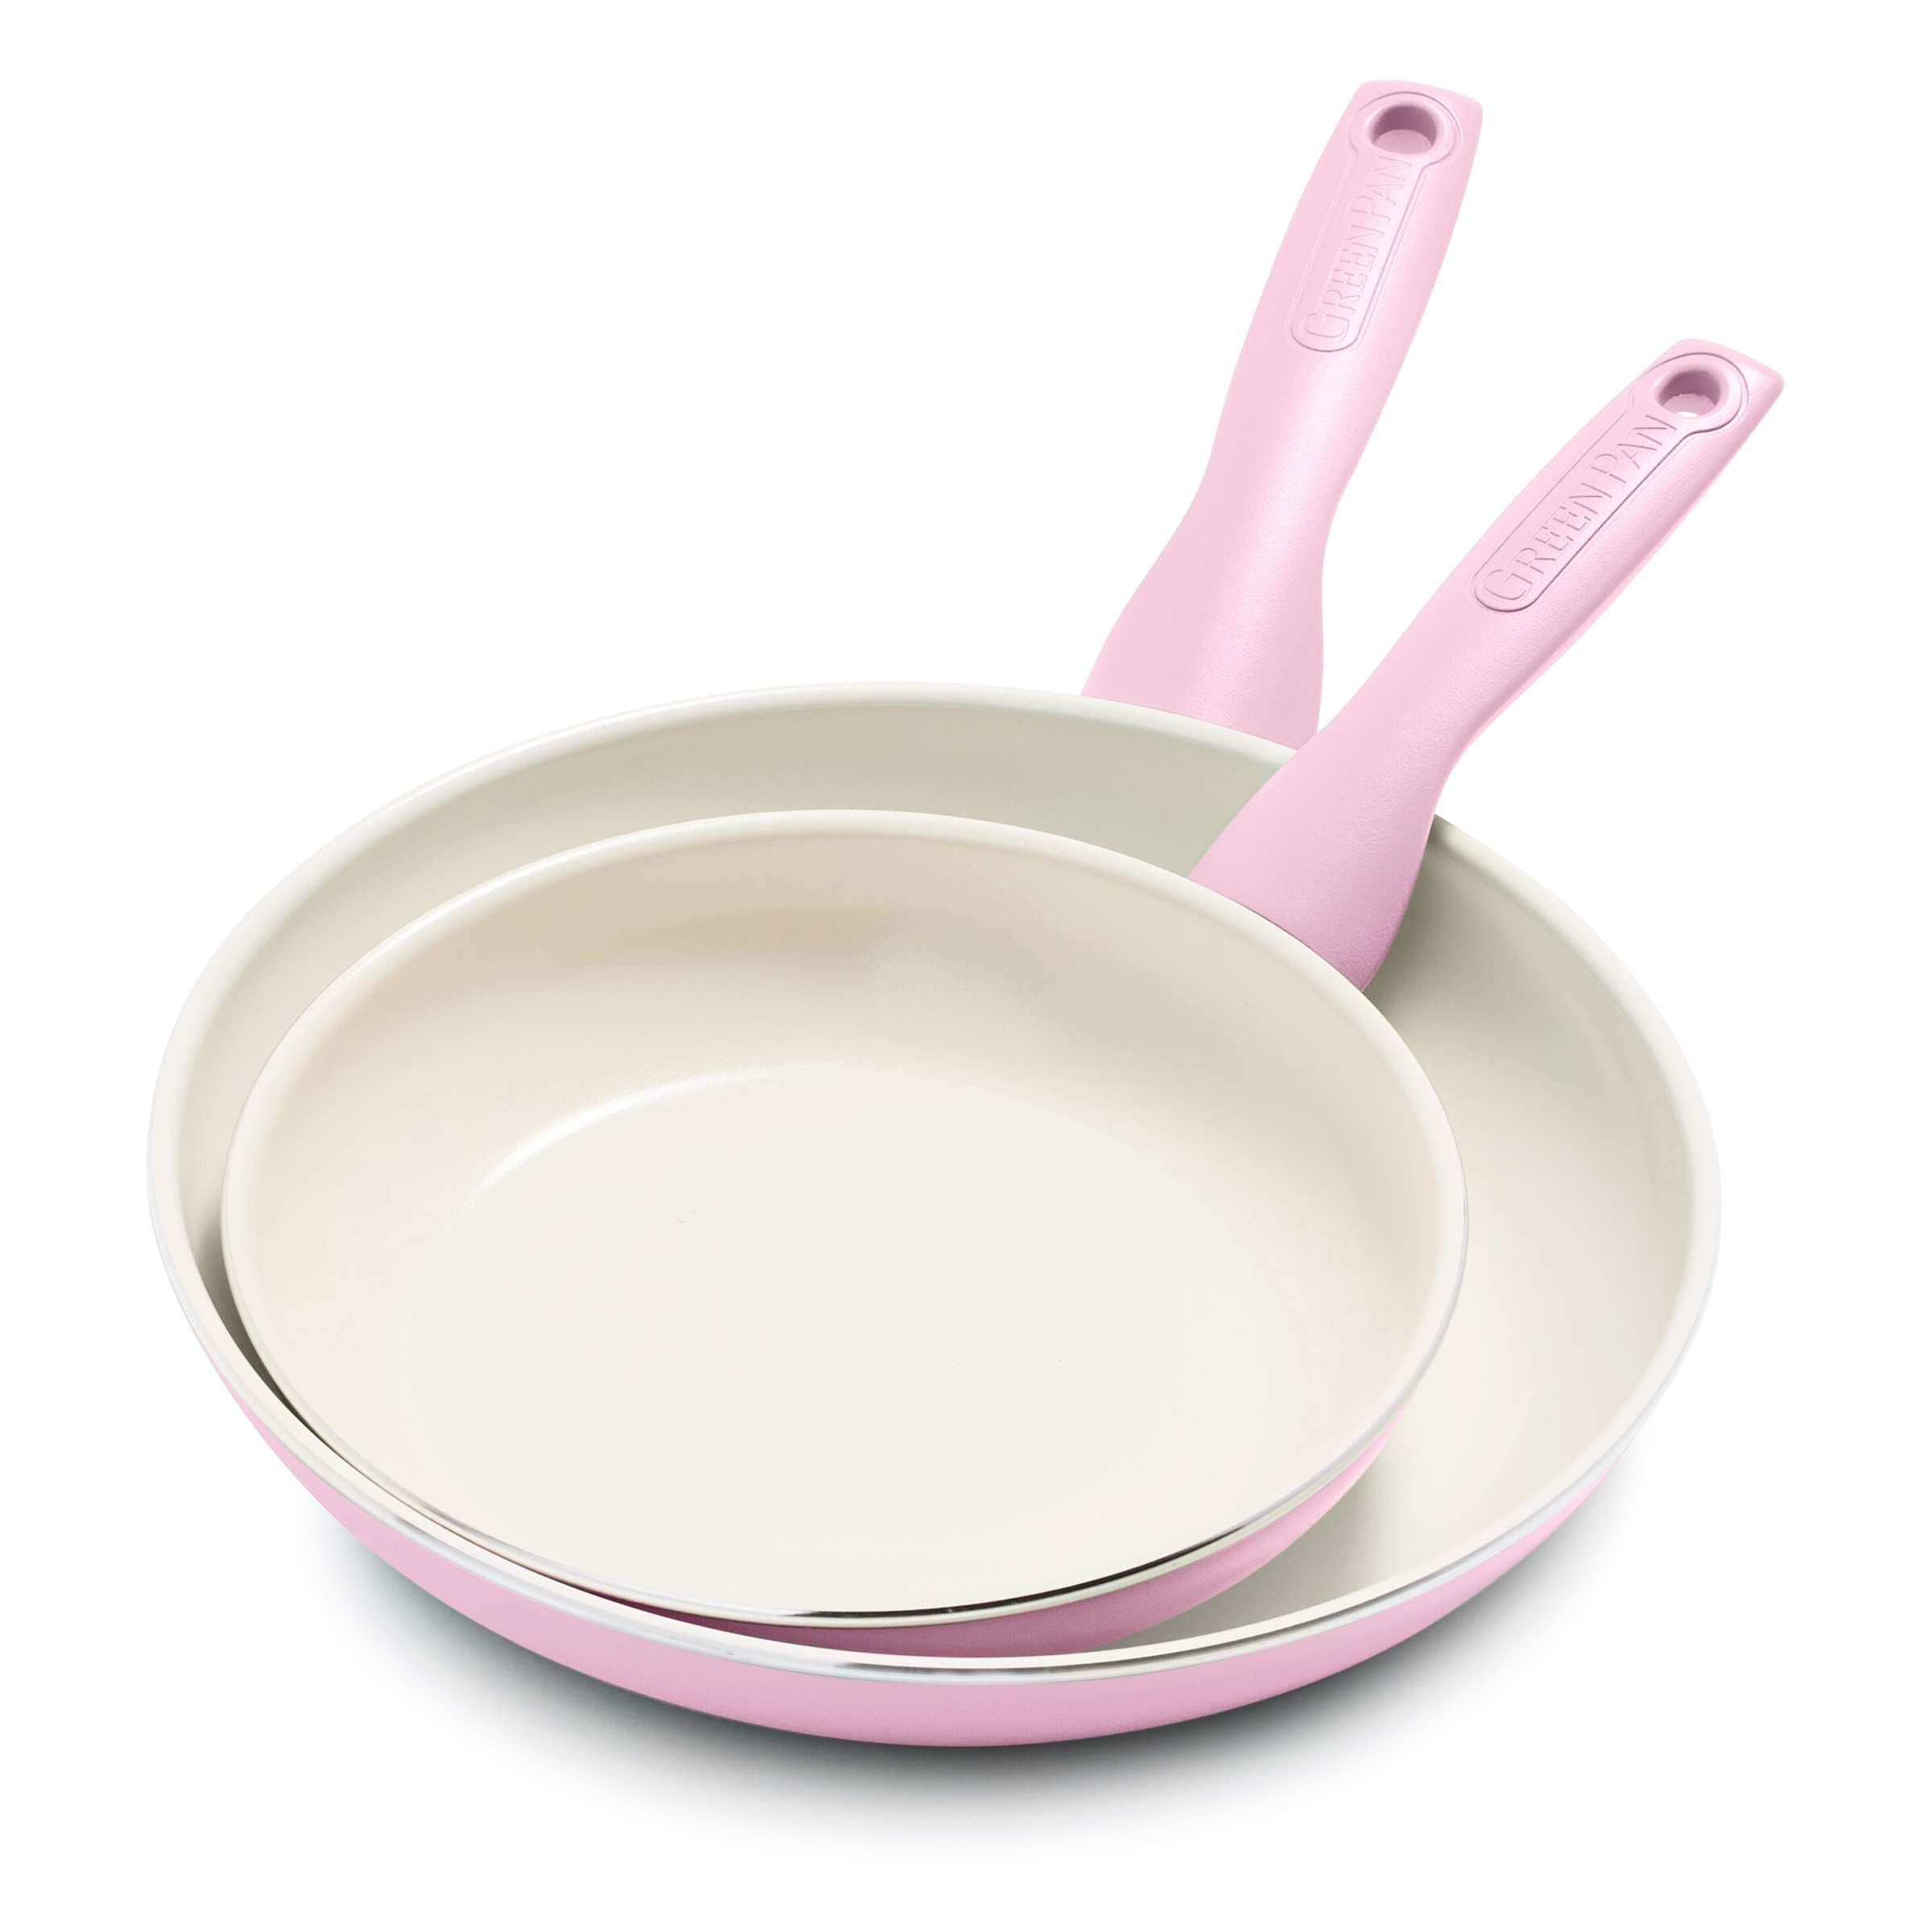 Rio Ceramic Nonstick 16-Piece Cookware Set, Pink